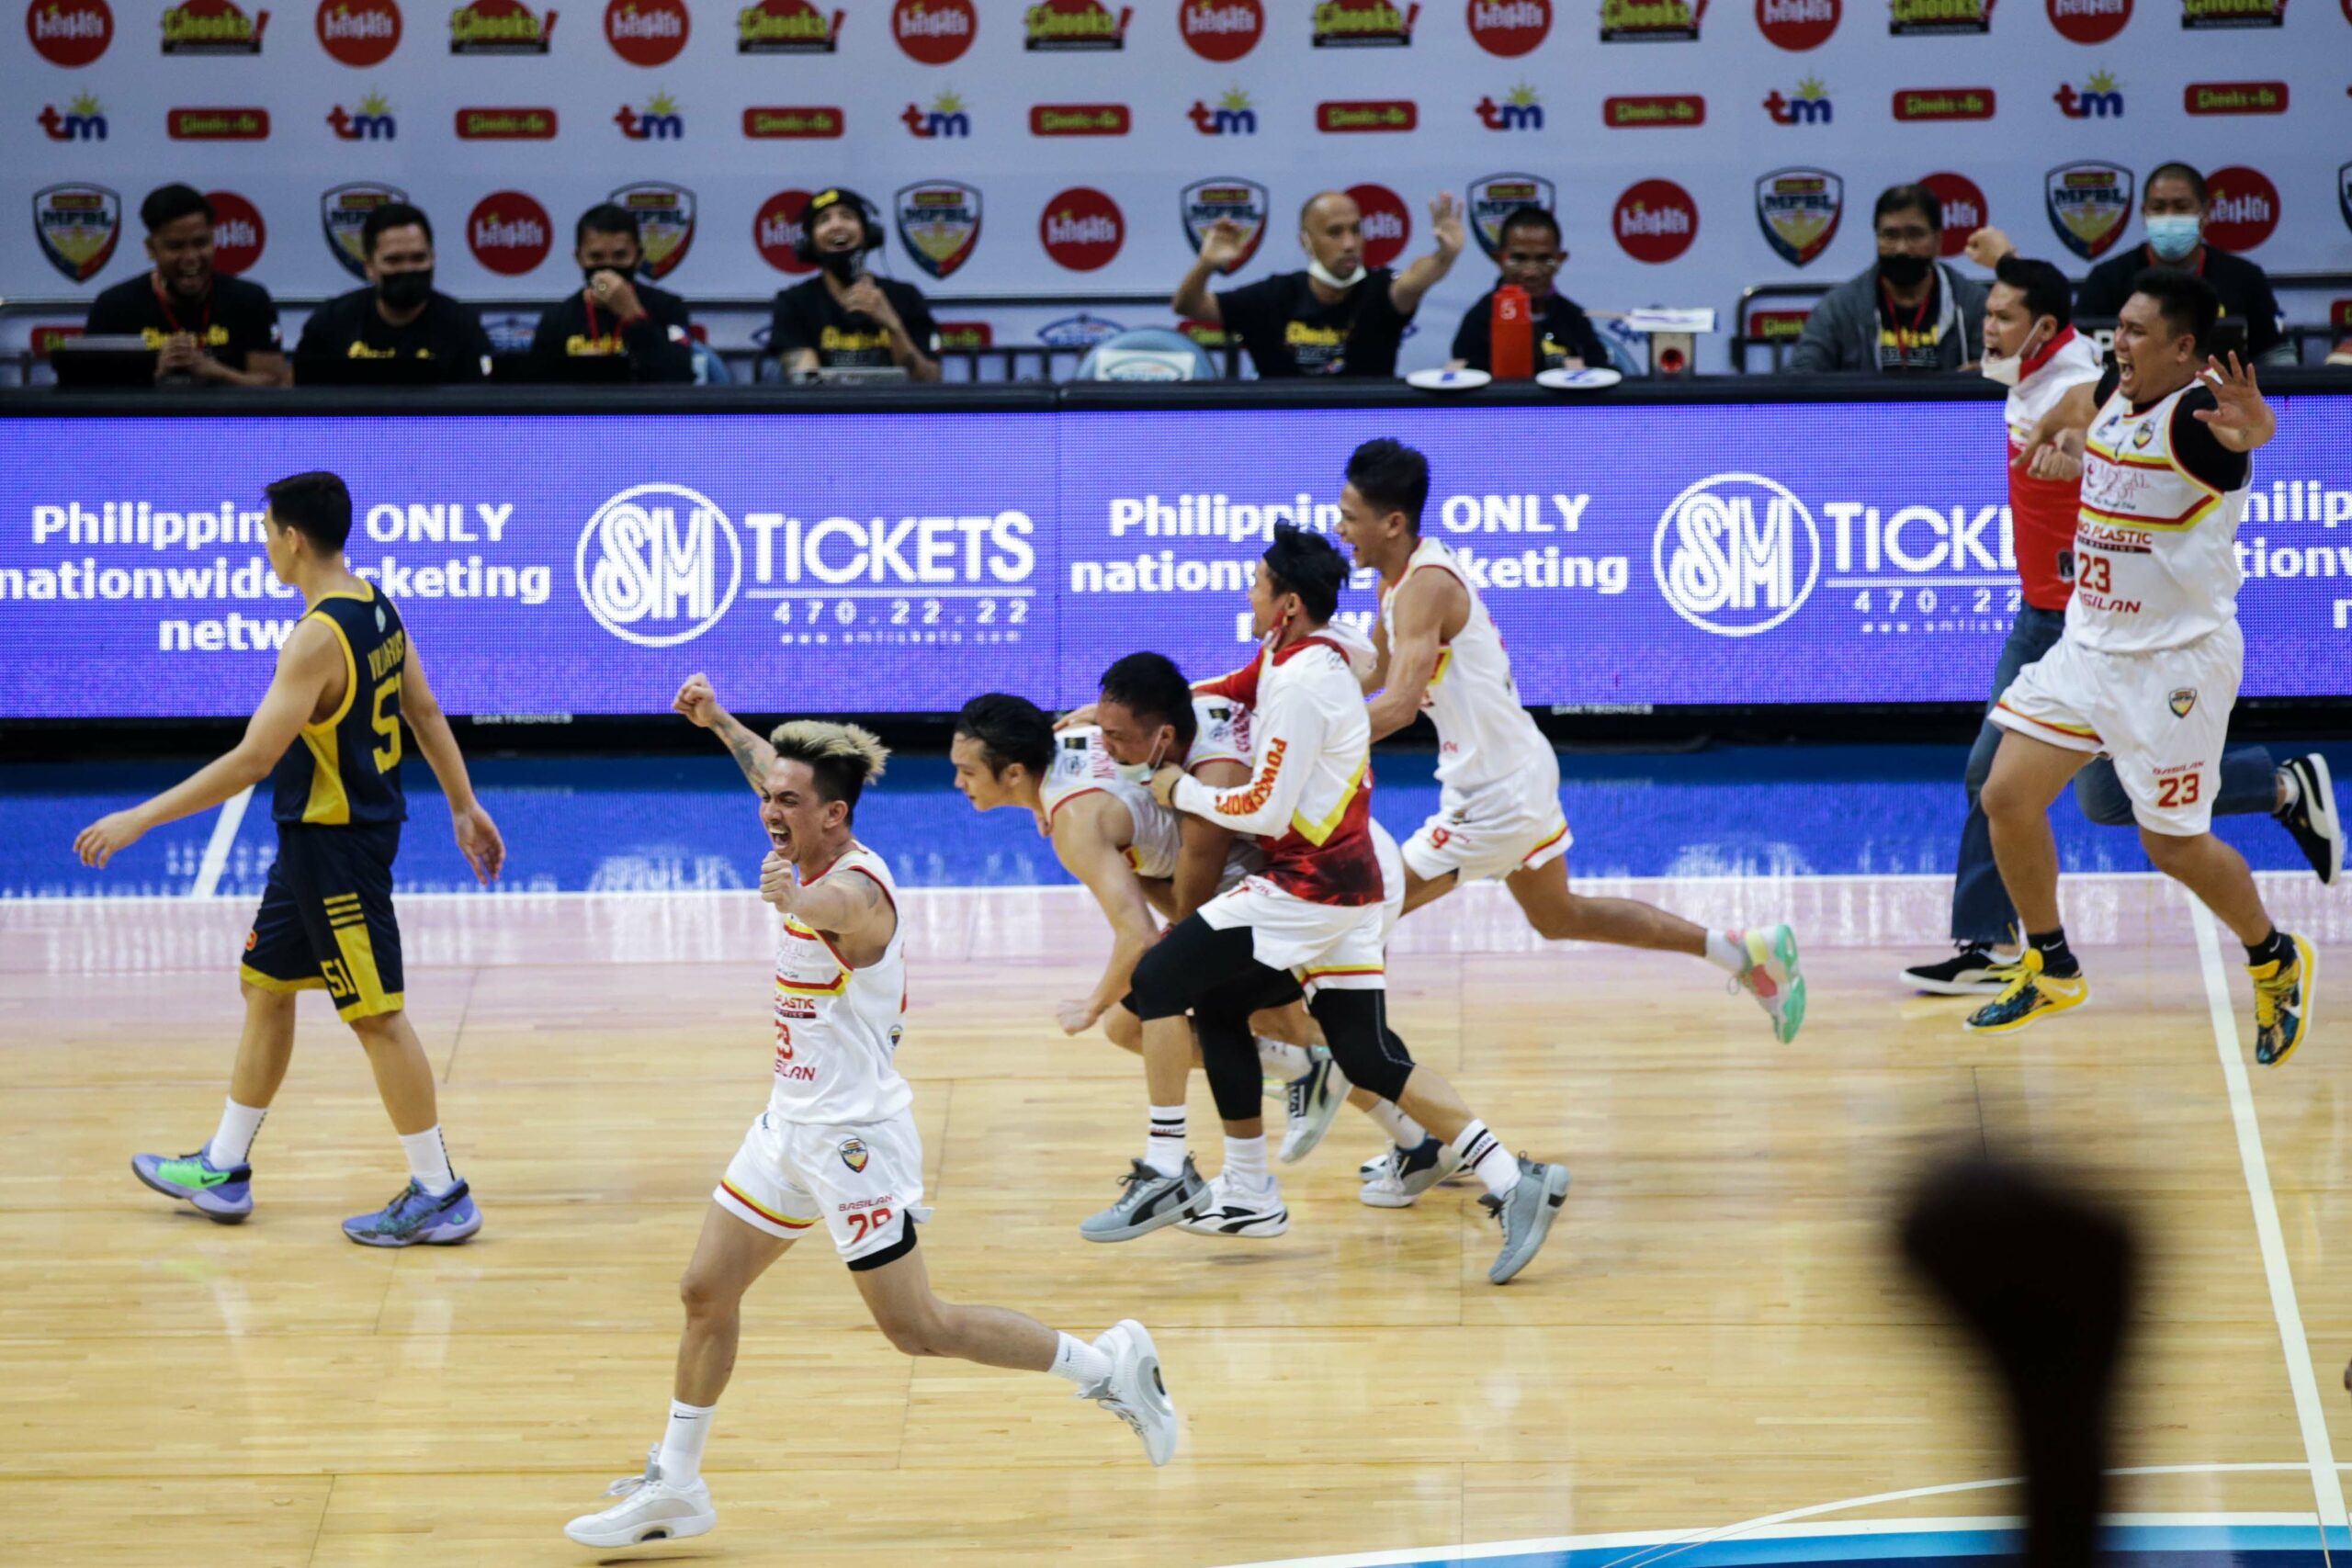 2021-Chooks-MPBL-Basilan-vs-Nueva-Ecija-Rice-Vanguards-3-scaled Juico used not winning MPBL MVP as added motivation in Final Basketball MPBL News  - philippine sports news